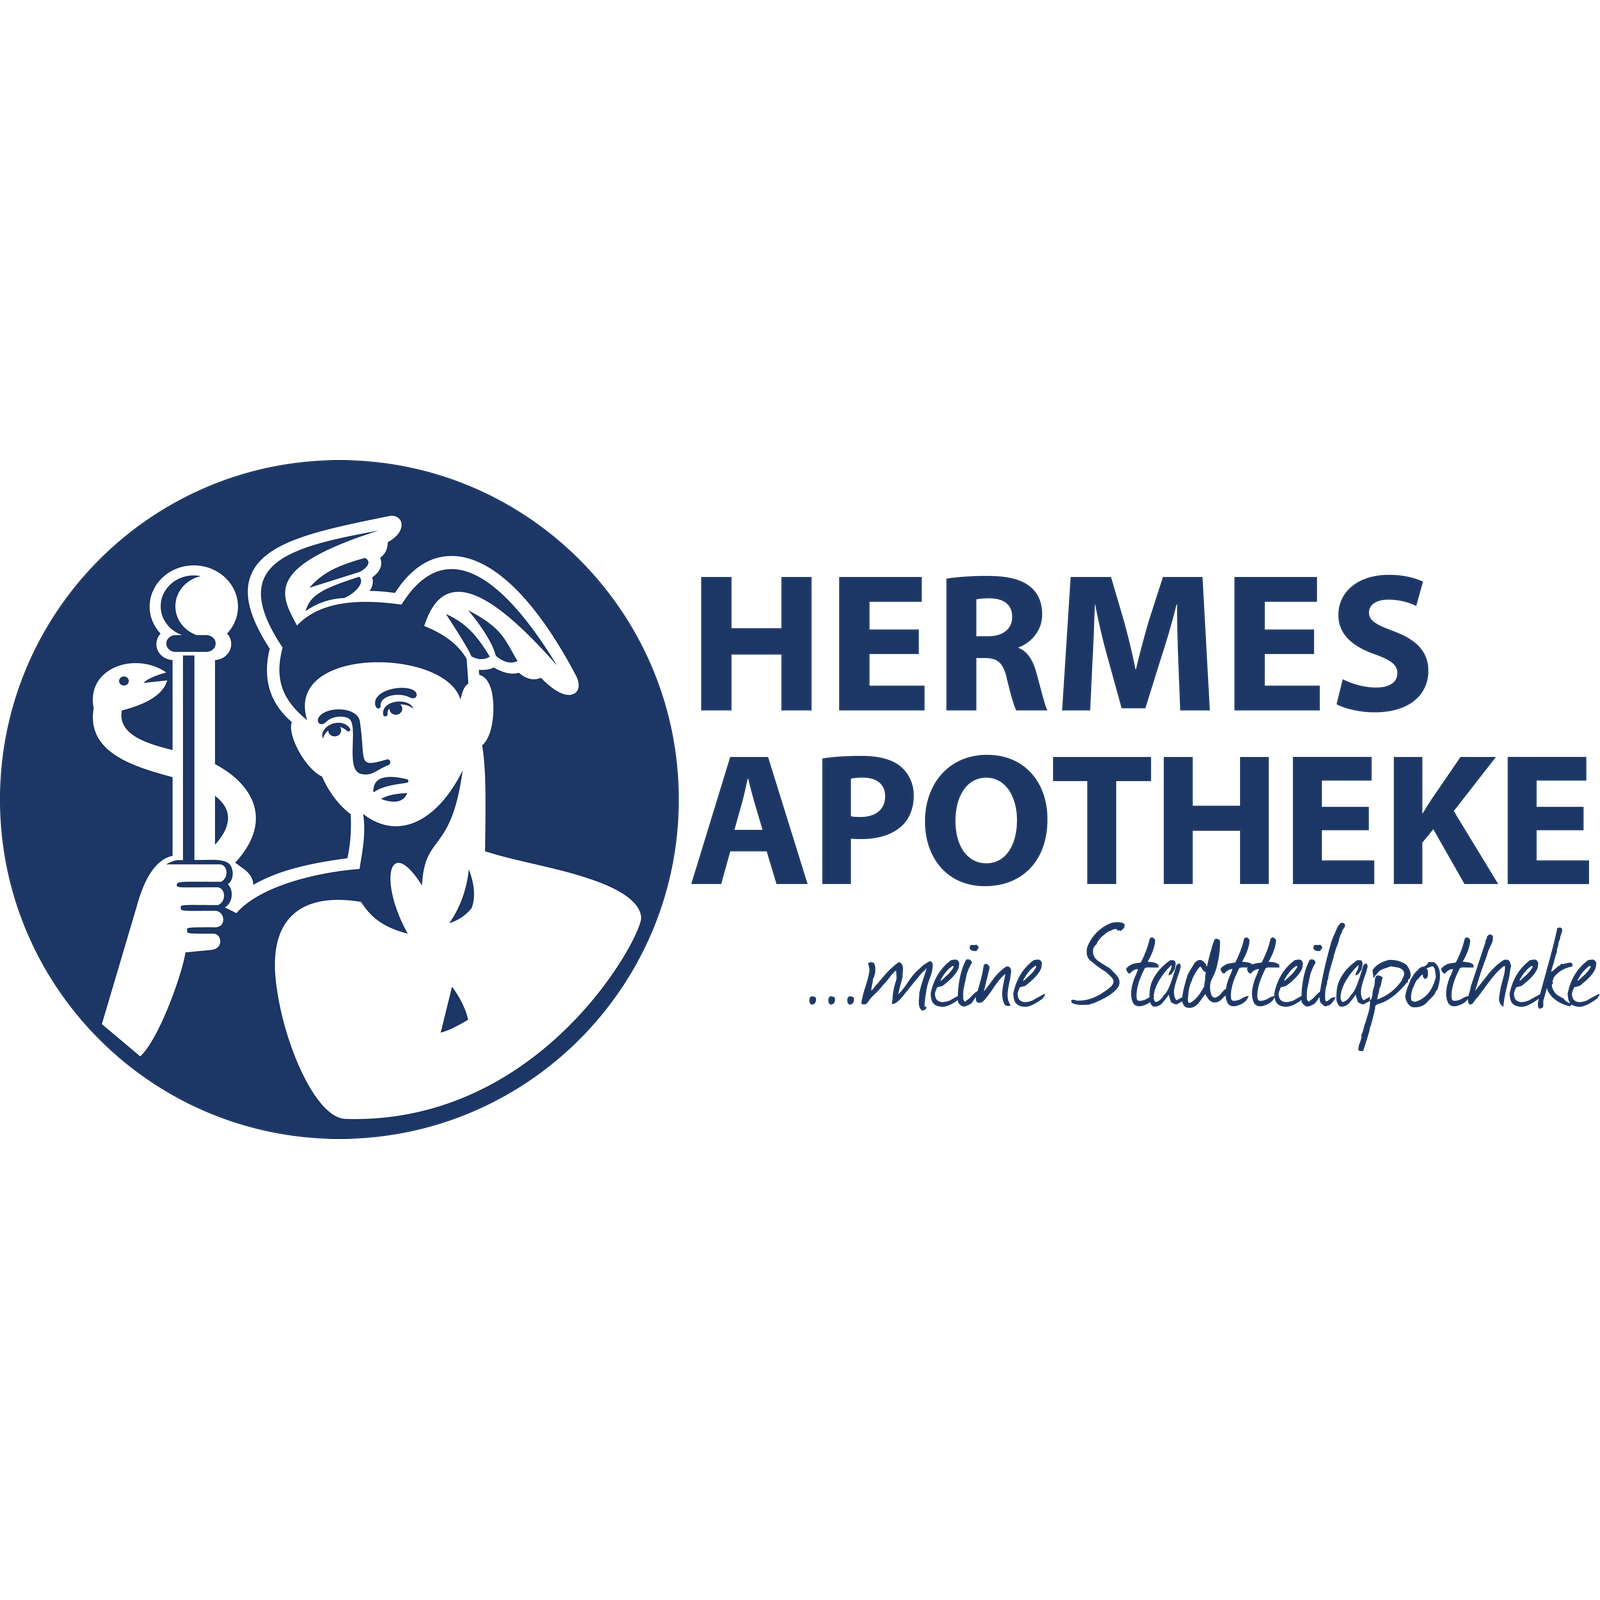 Hermes-Apotheke in Hamburg - Logo